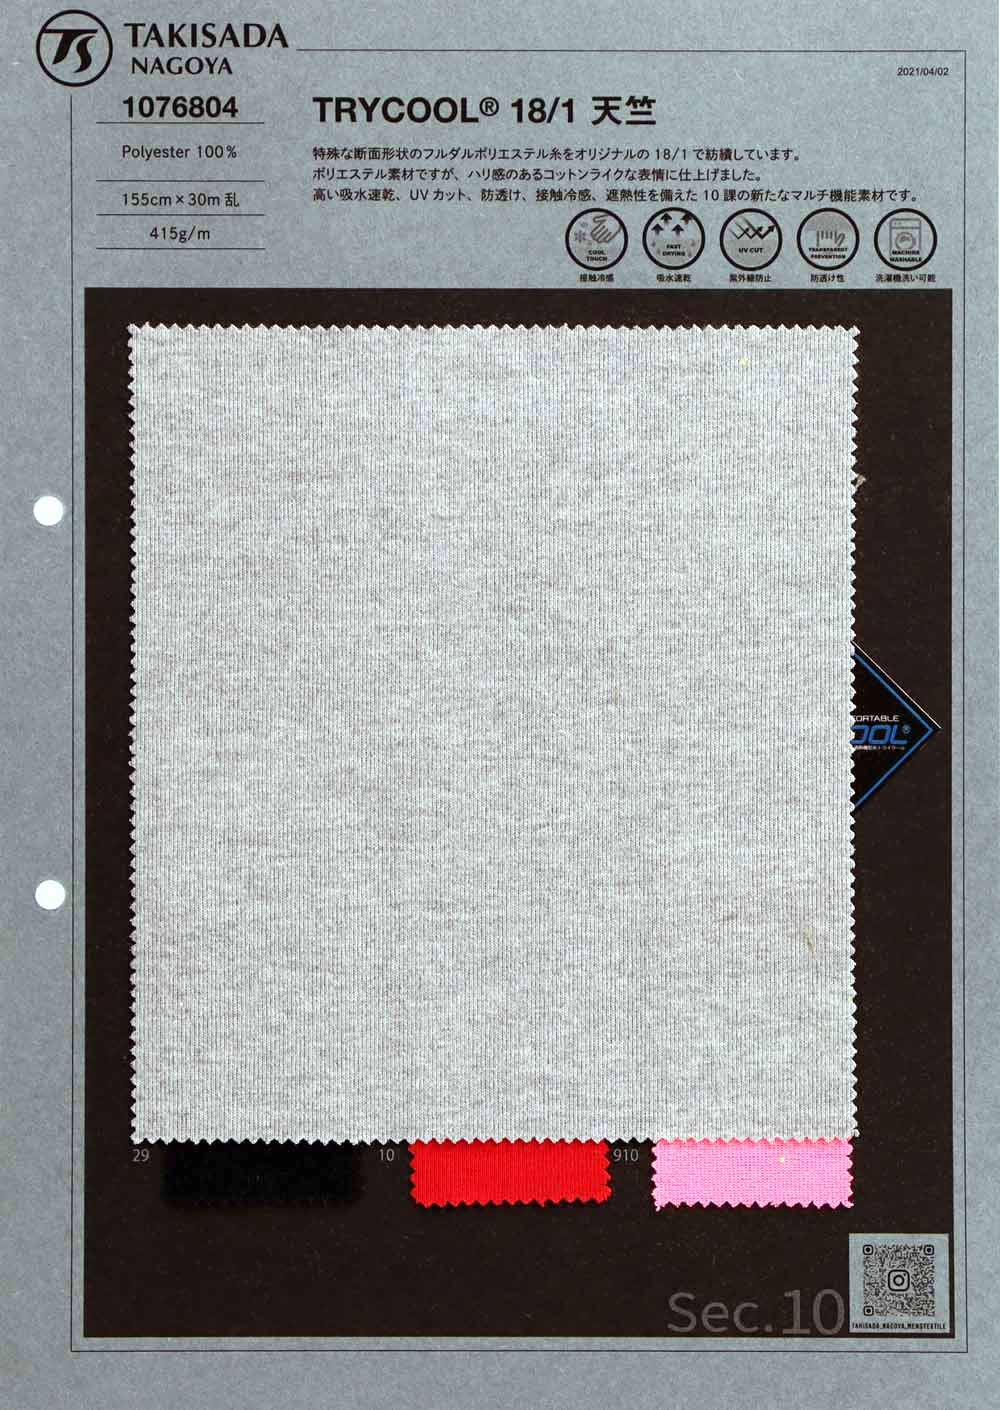 1076804 TRYCOOL 18/1 Cotton Jersey[Textile / Fabric] Takisada Nagoya